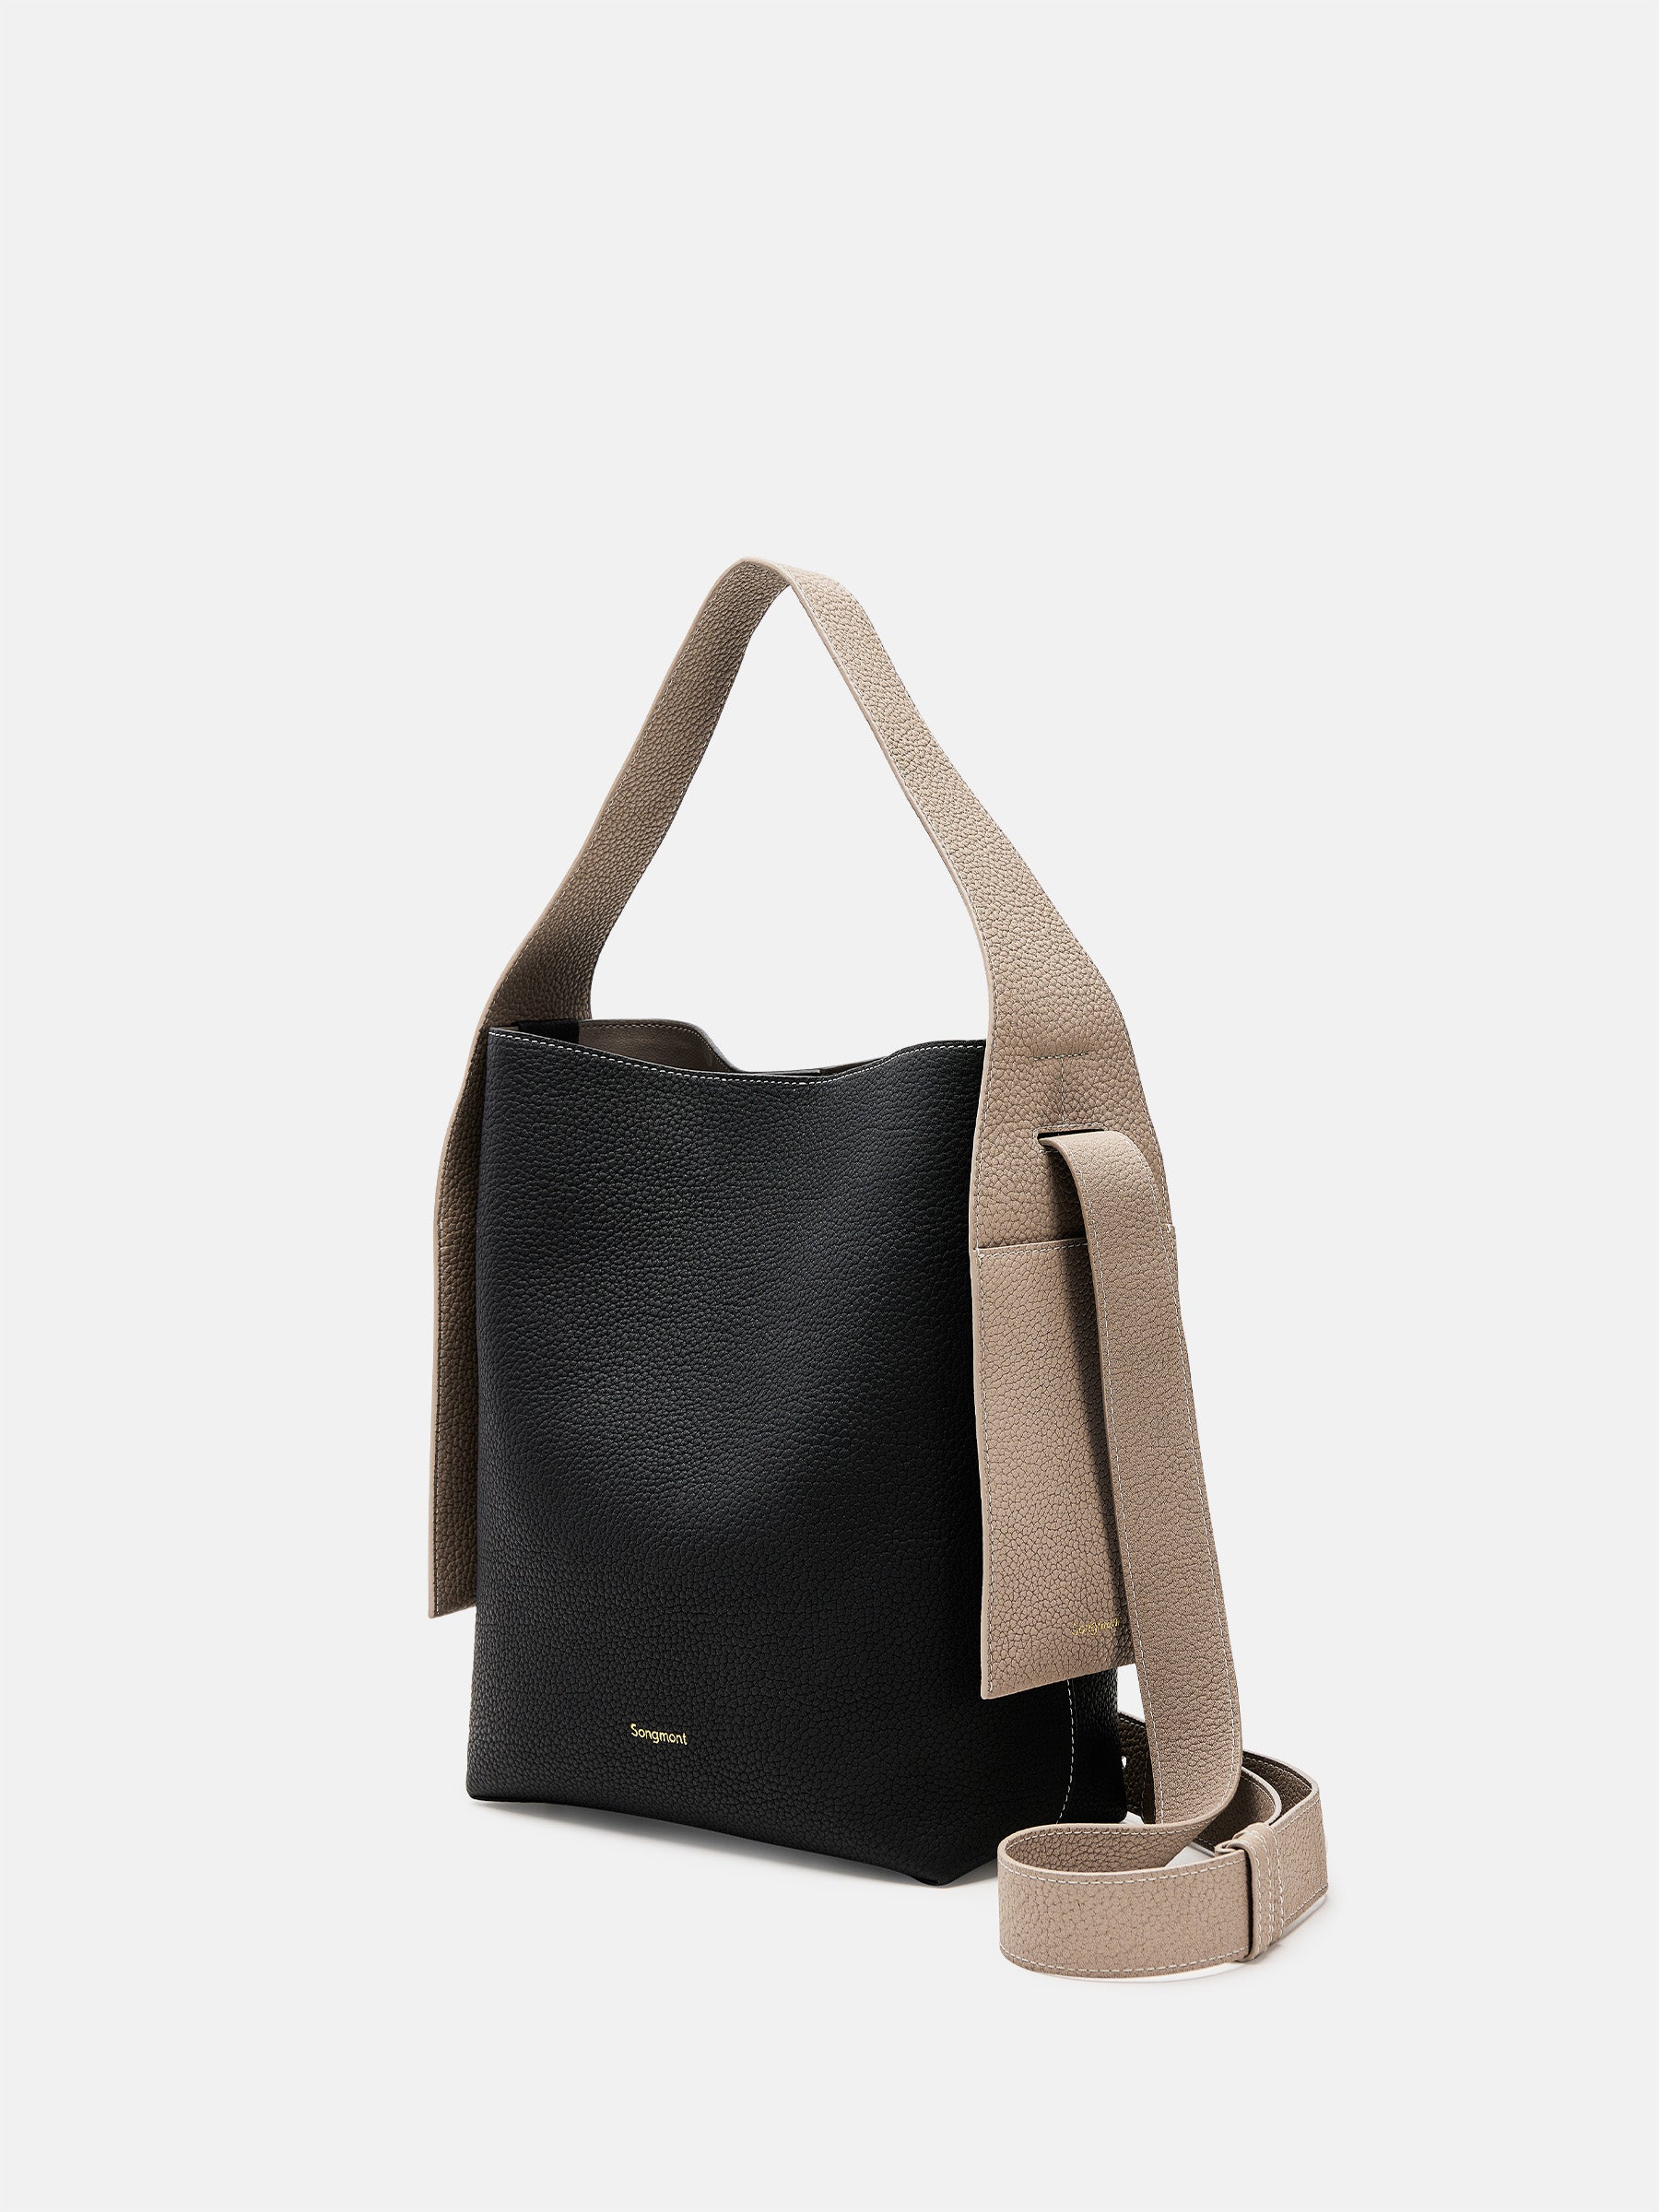 Brand: Zara bag (SOLD) Condition: 10/10 Original price: $30 Asking